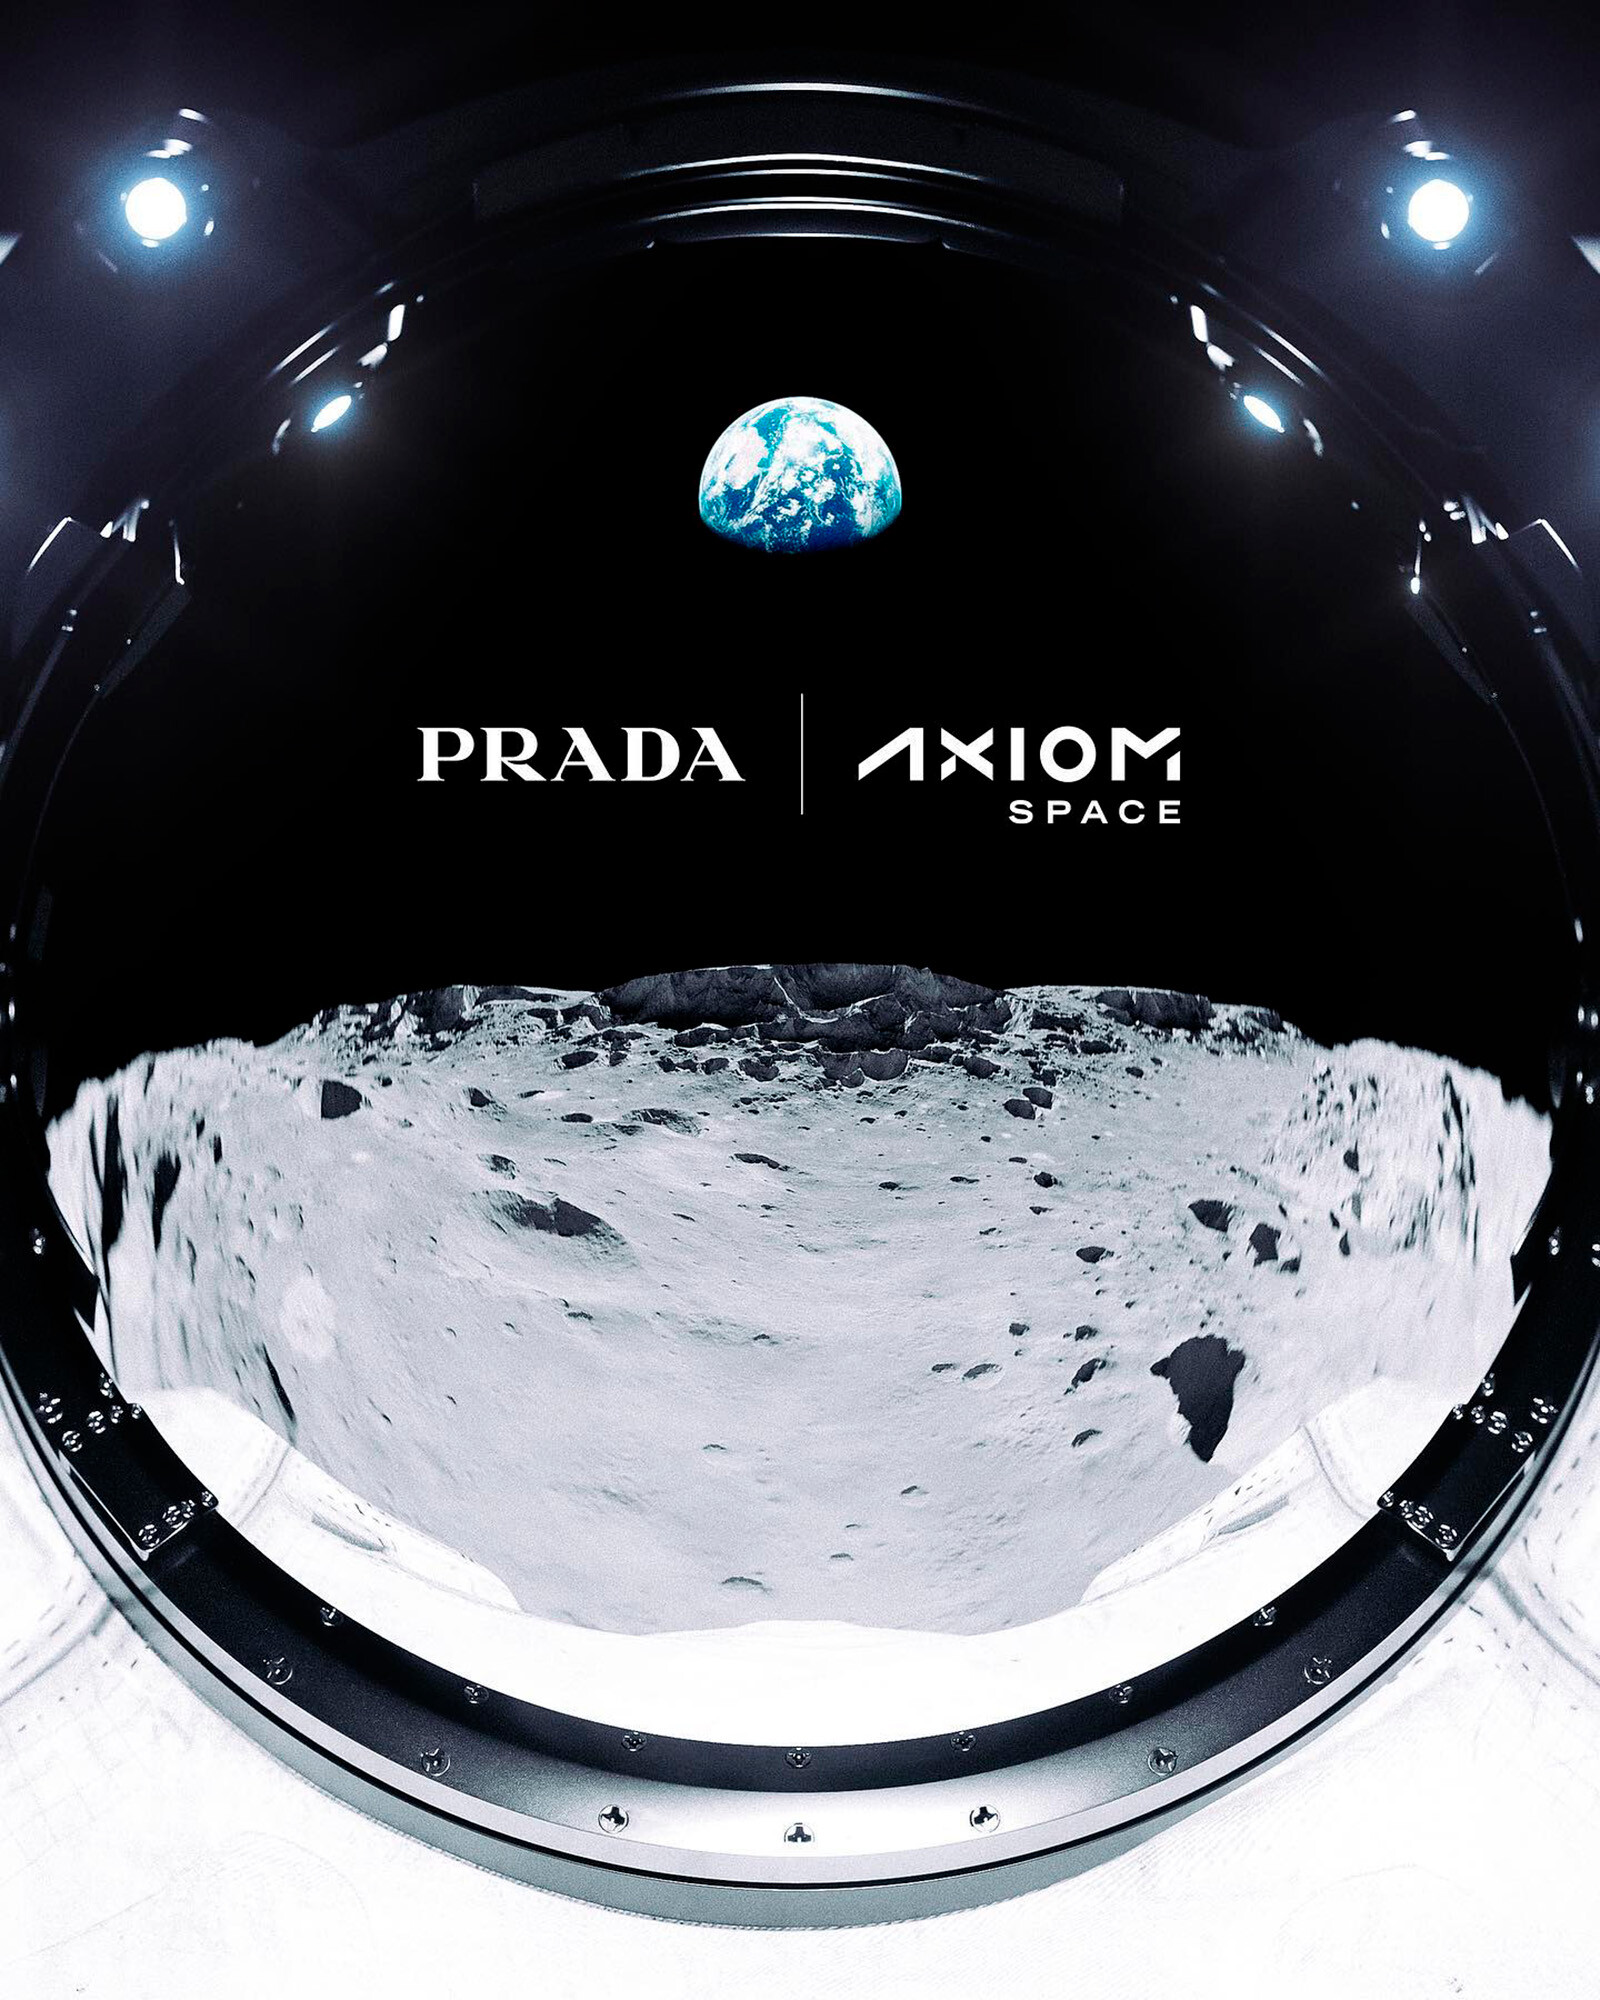 Prada теперь разрабатывает скафандры для посадки на Луну